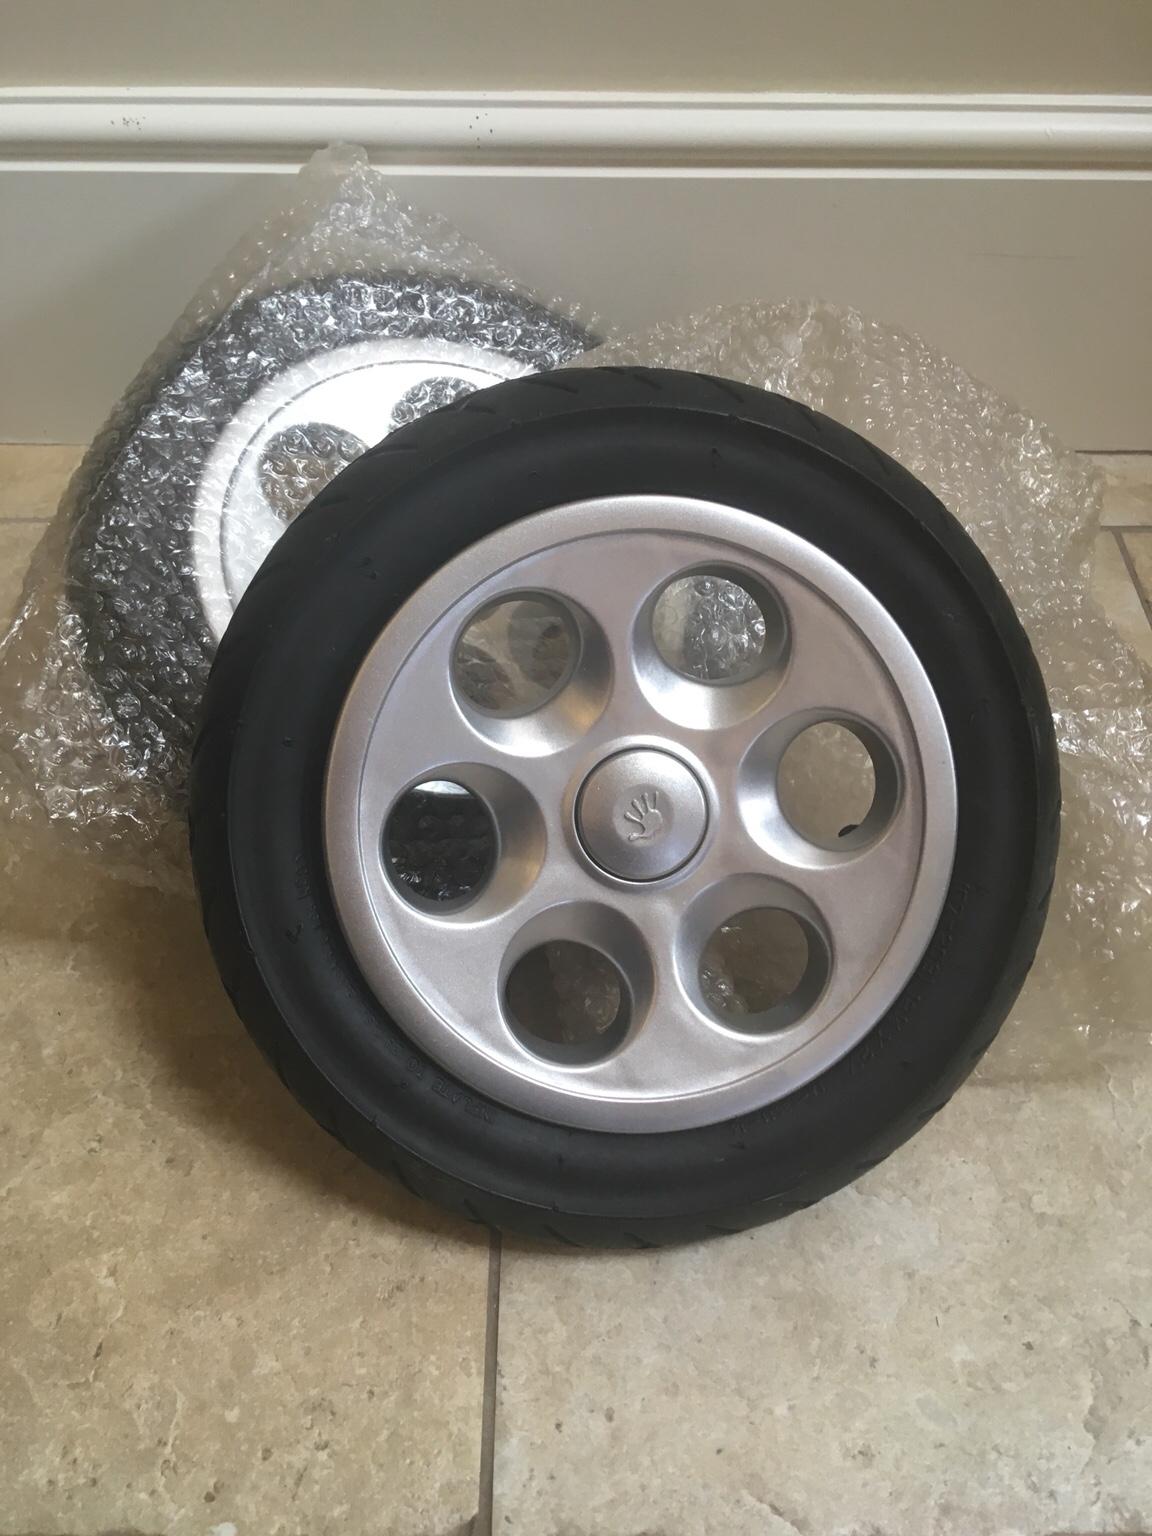 joolz pram wheels